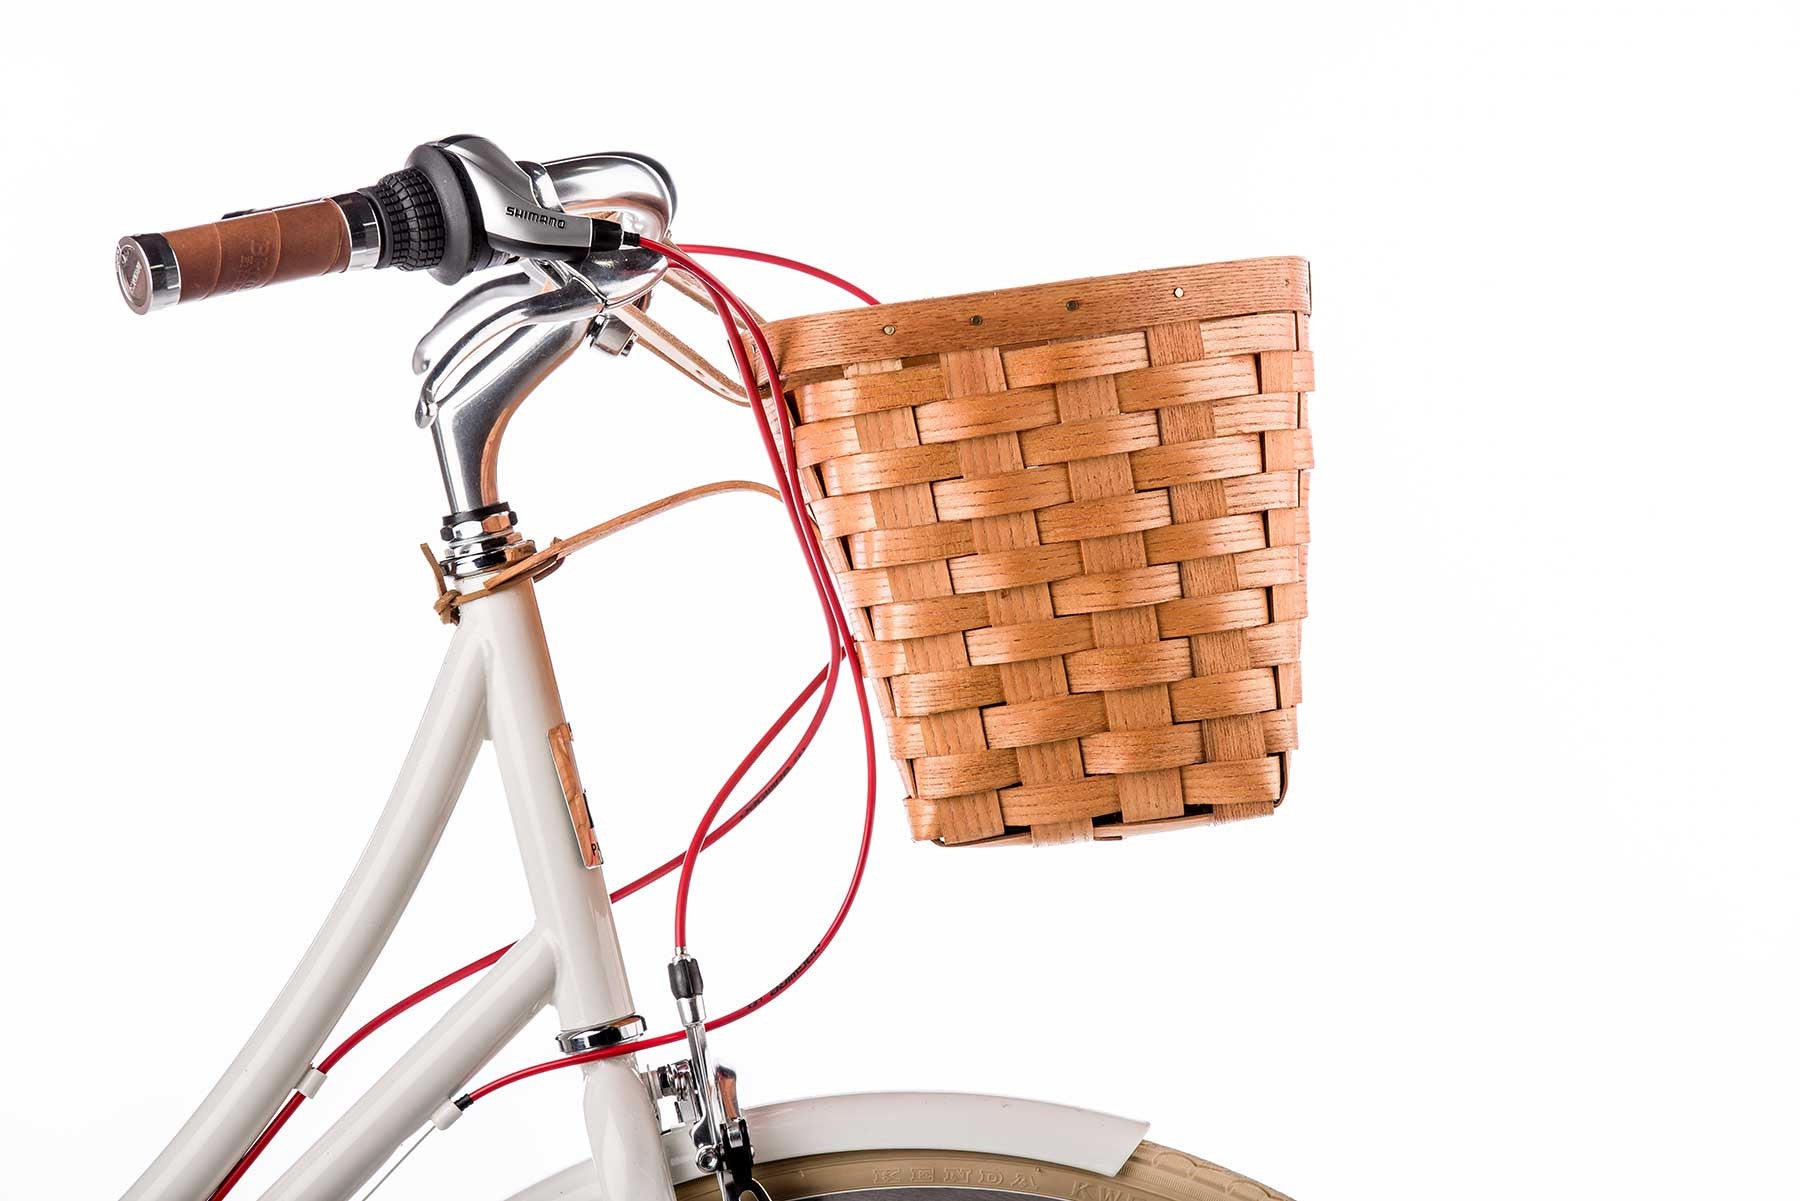 Large Wicker Bike Basket - The Basket Company